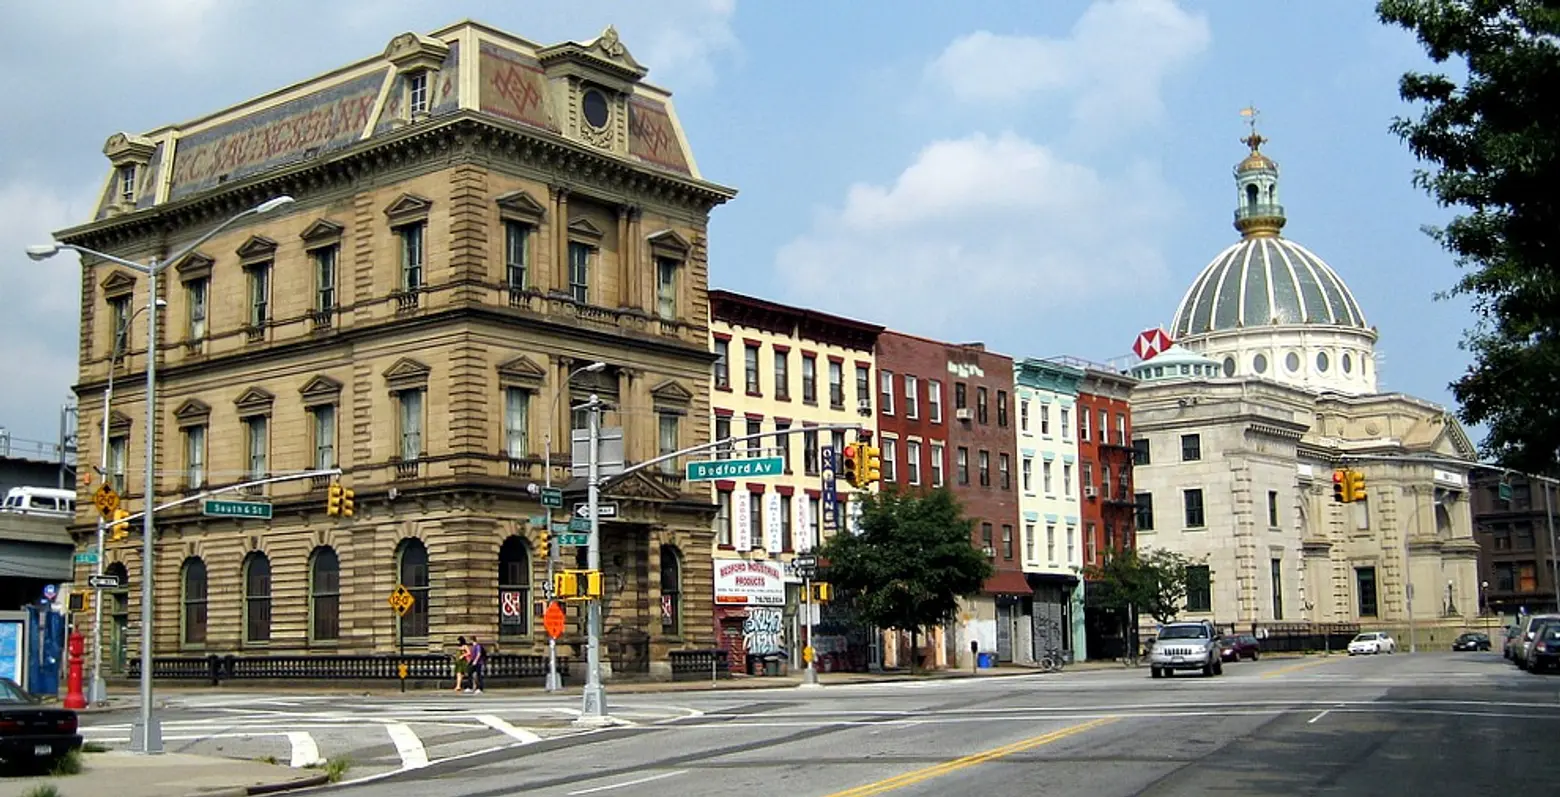 Broadway in Brooklyn, Kings County Savings Bank, Williamsburg Savings Bank